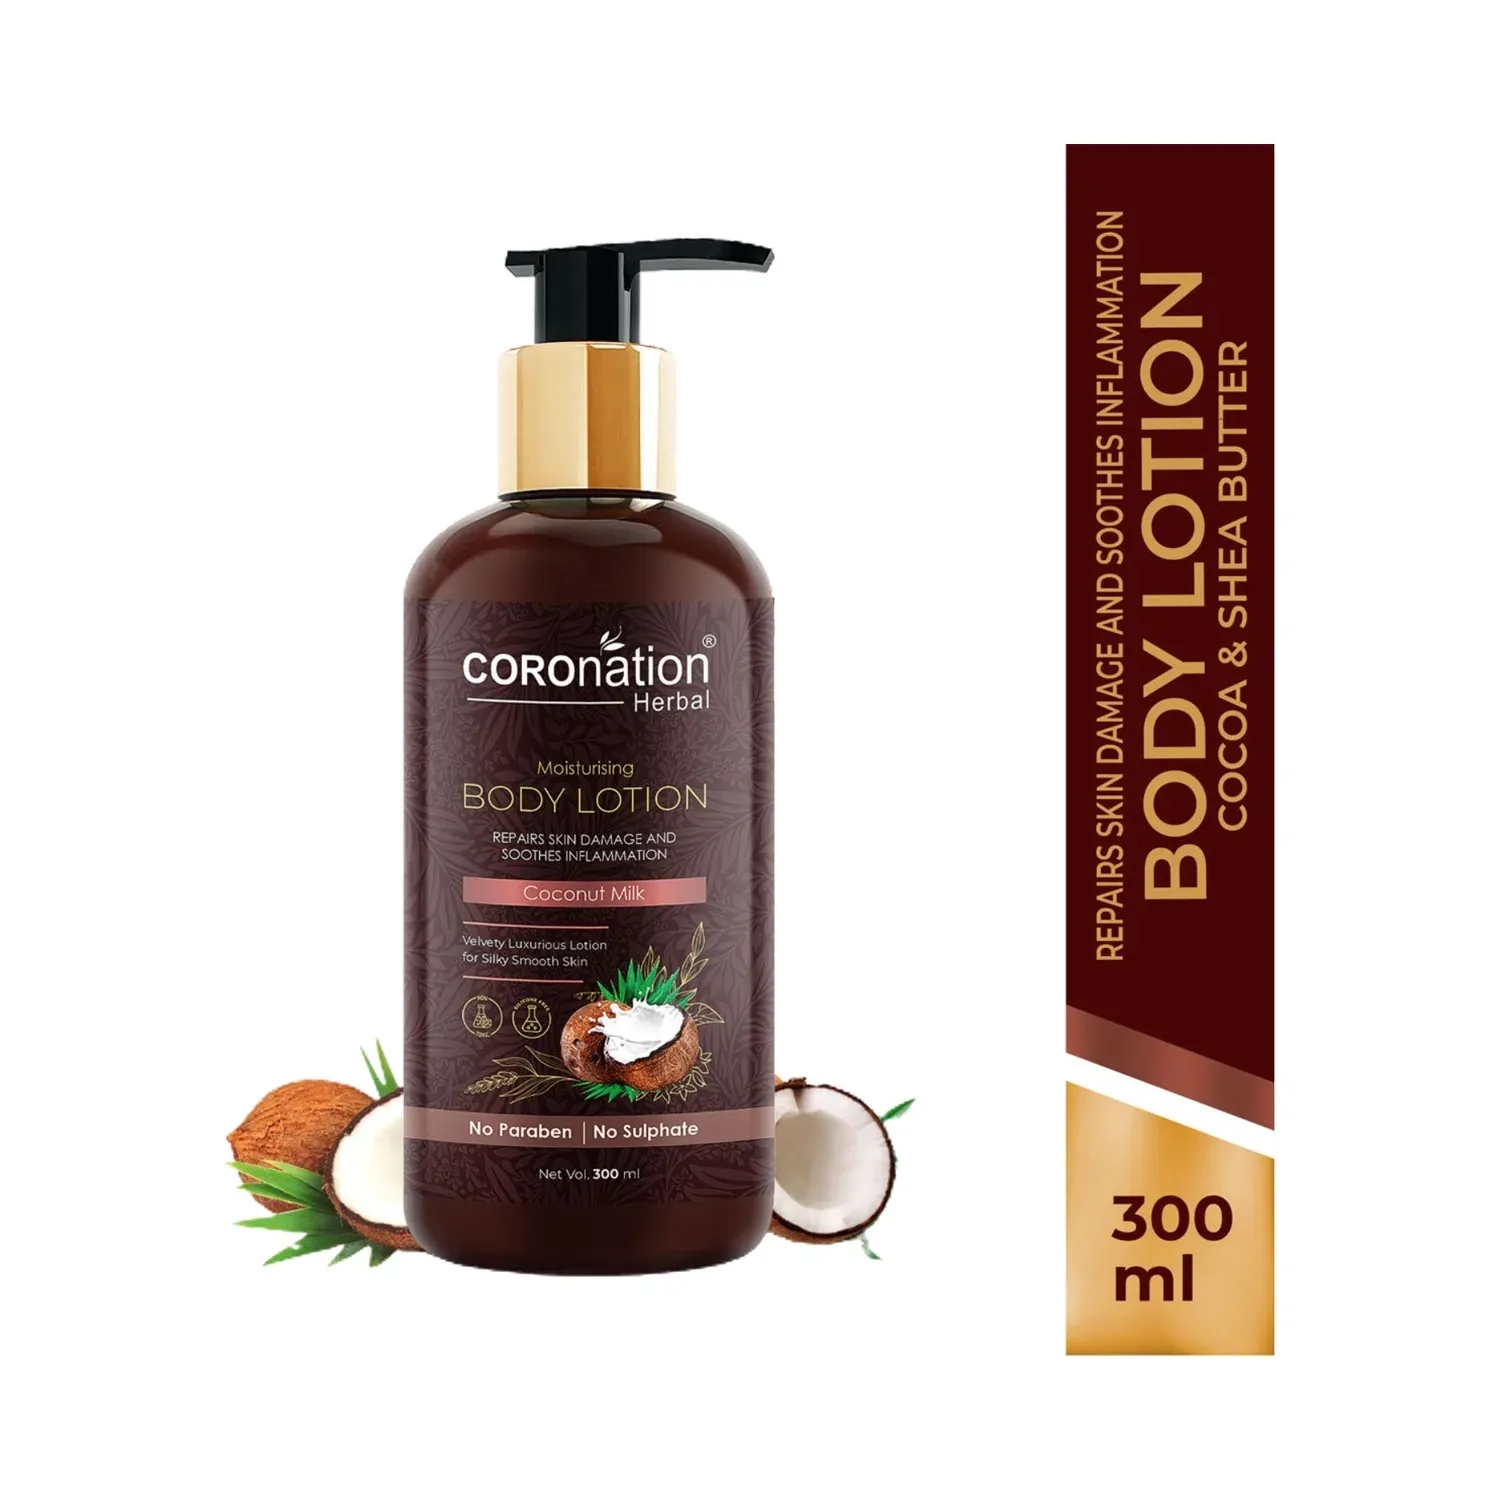 COROnation Herbal Coconut Milk Body Lotion (300ml)